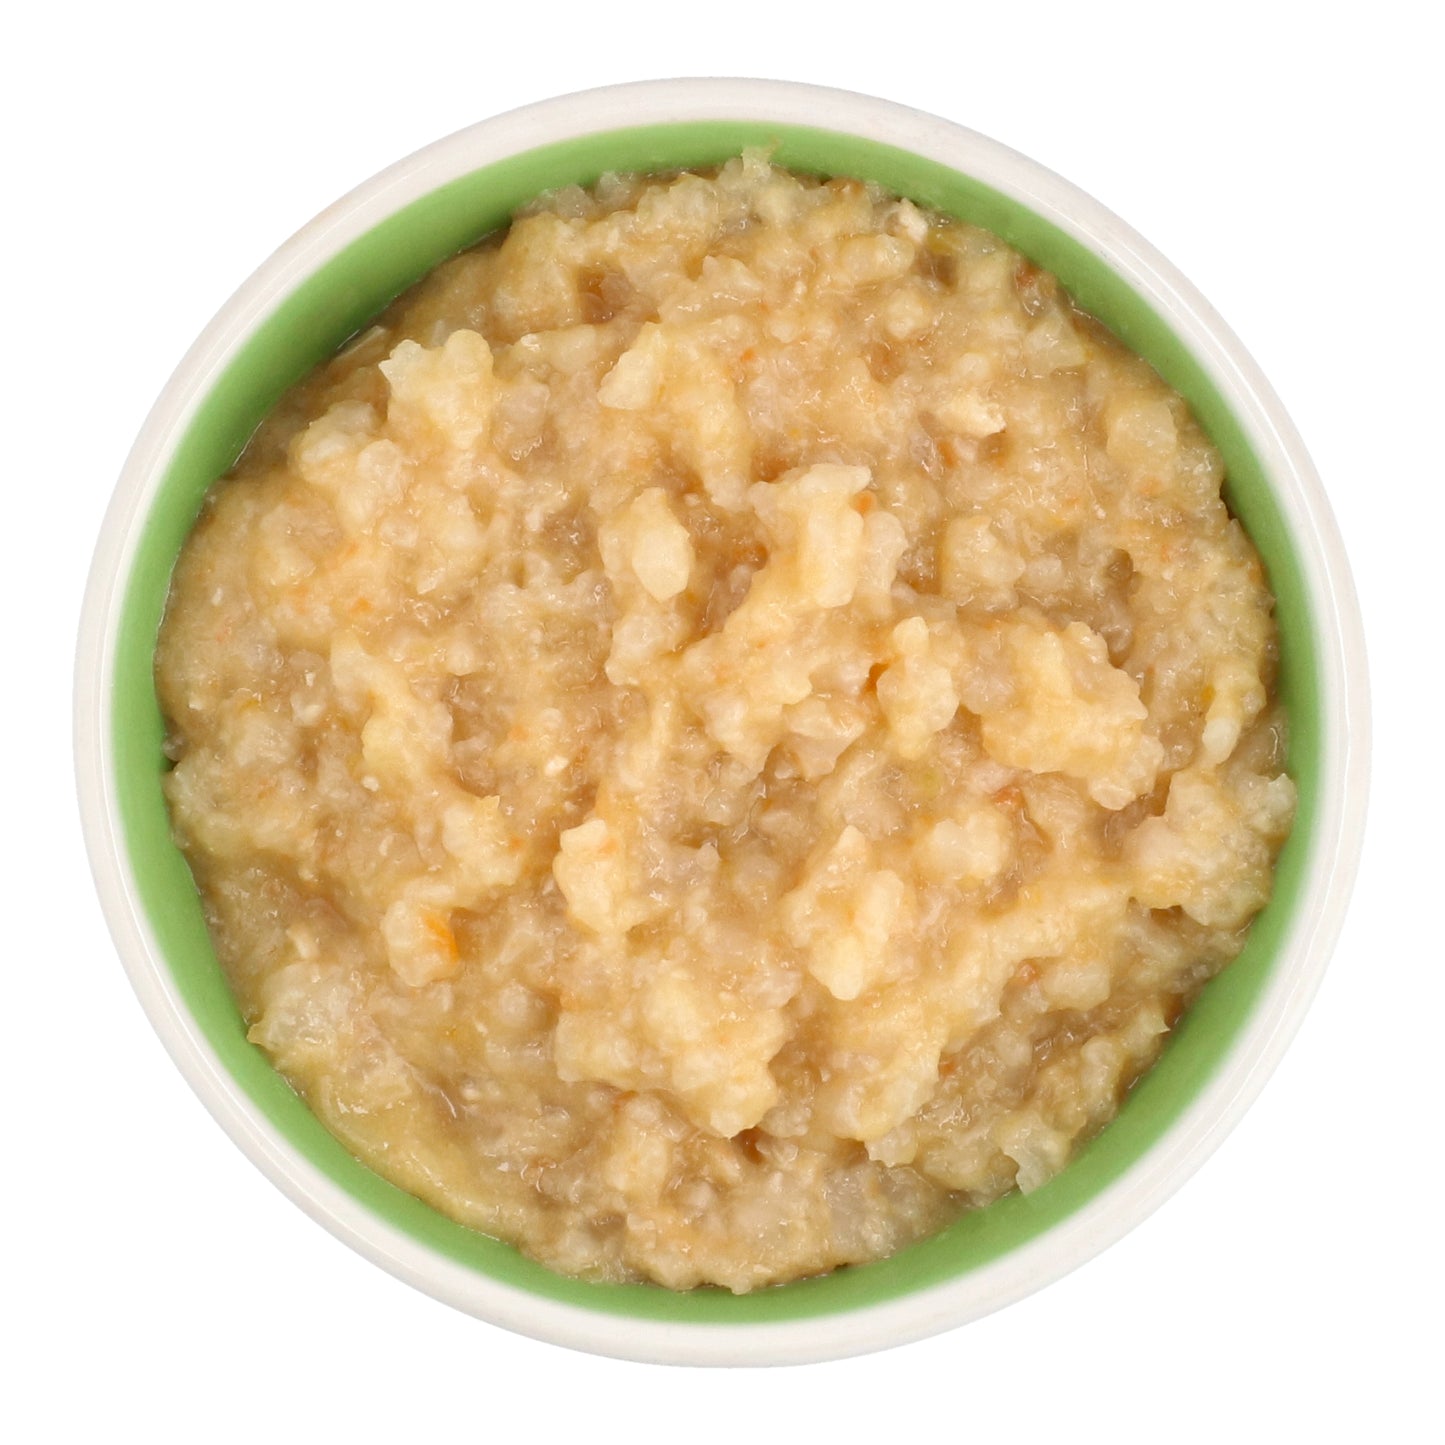 Eusik  - Baby Rice Porridge (Cod & Soft Tofu) 145g, 8mths+